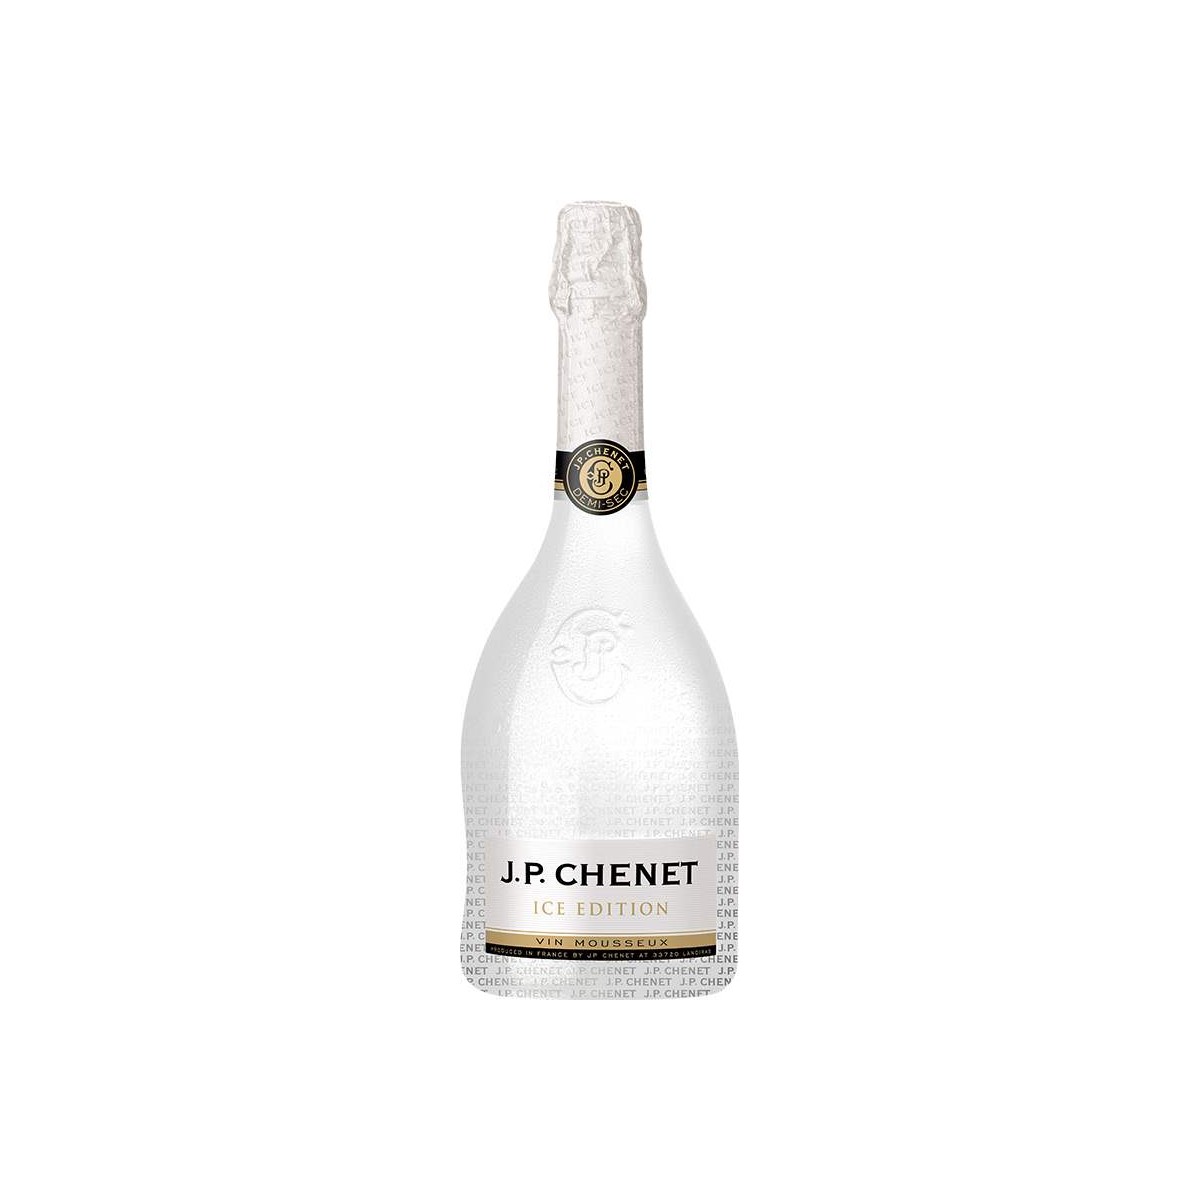 J.P. Chardonnay Demi Sec Ice Edition 0,75l